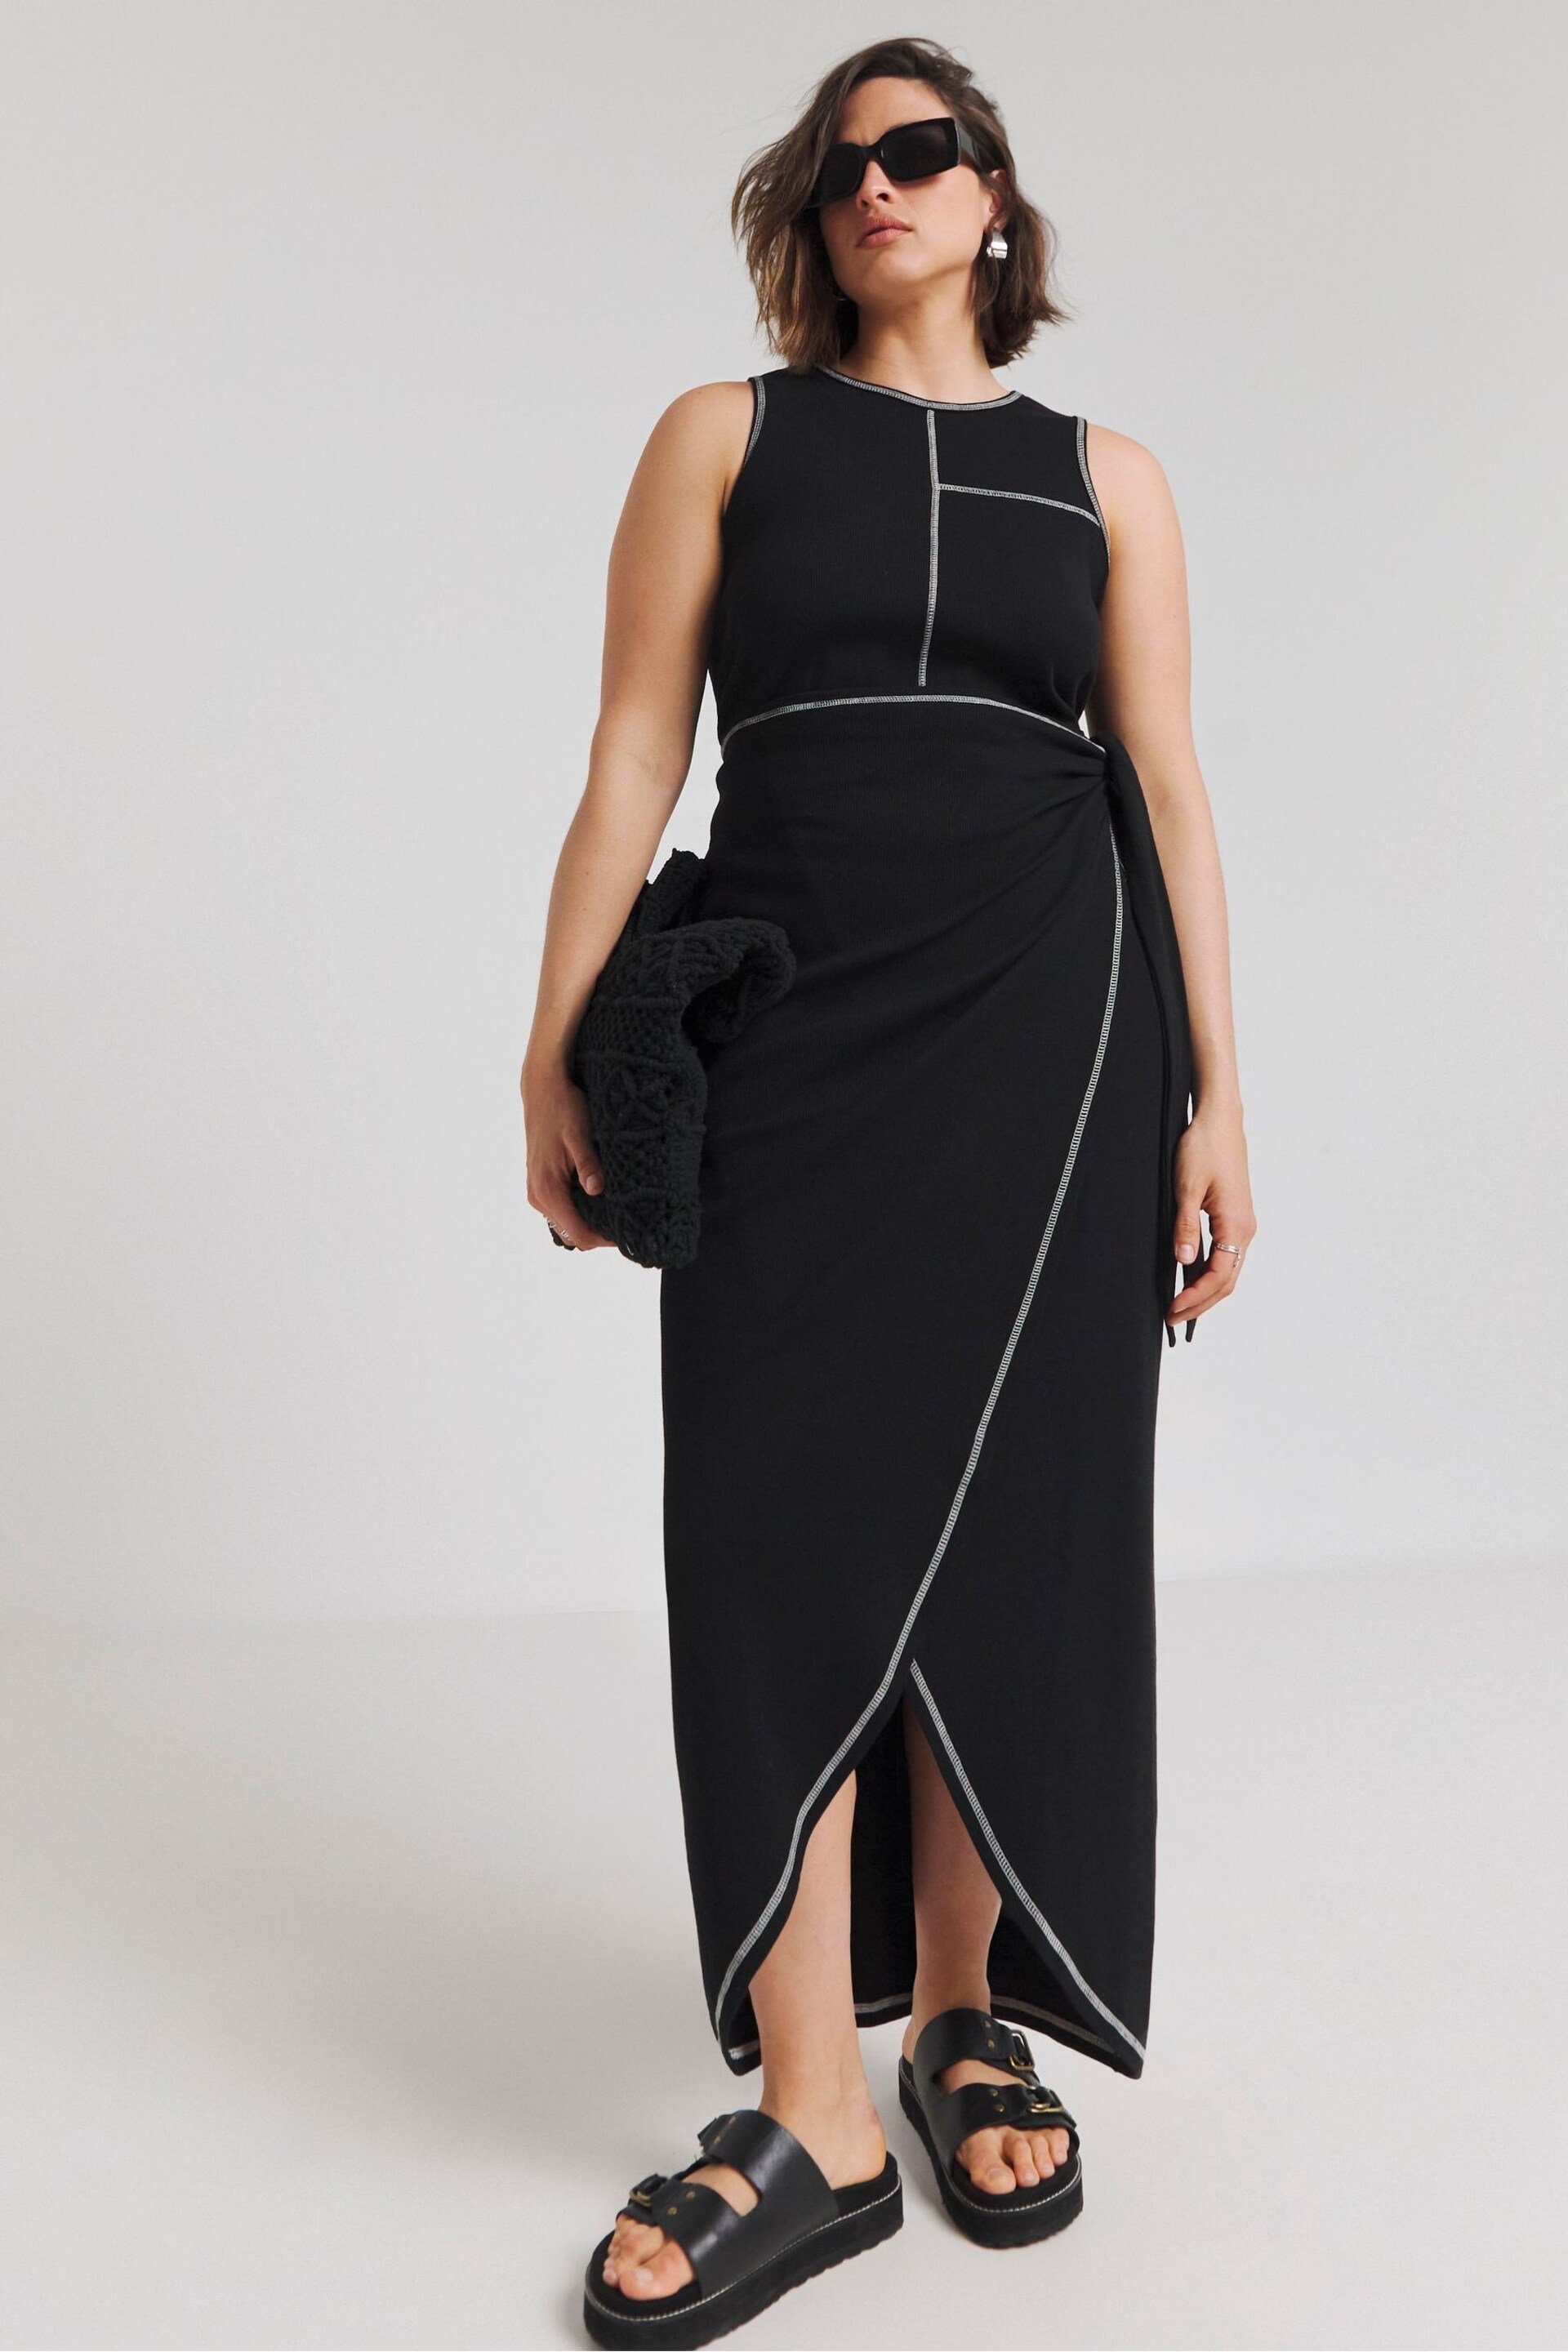 Simply Be Black Exposed Seam Wrap Maxi Dress - Image 3 of 4